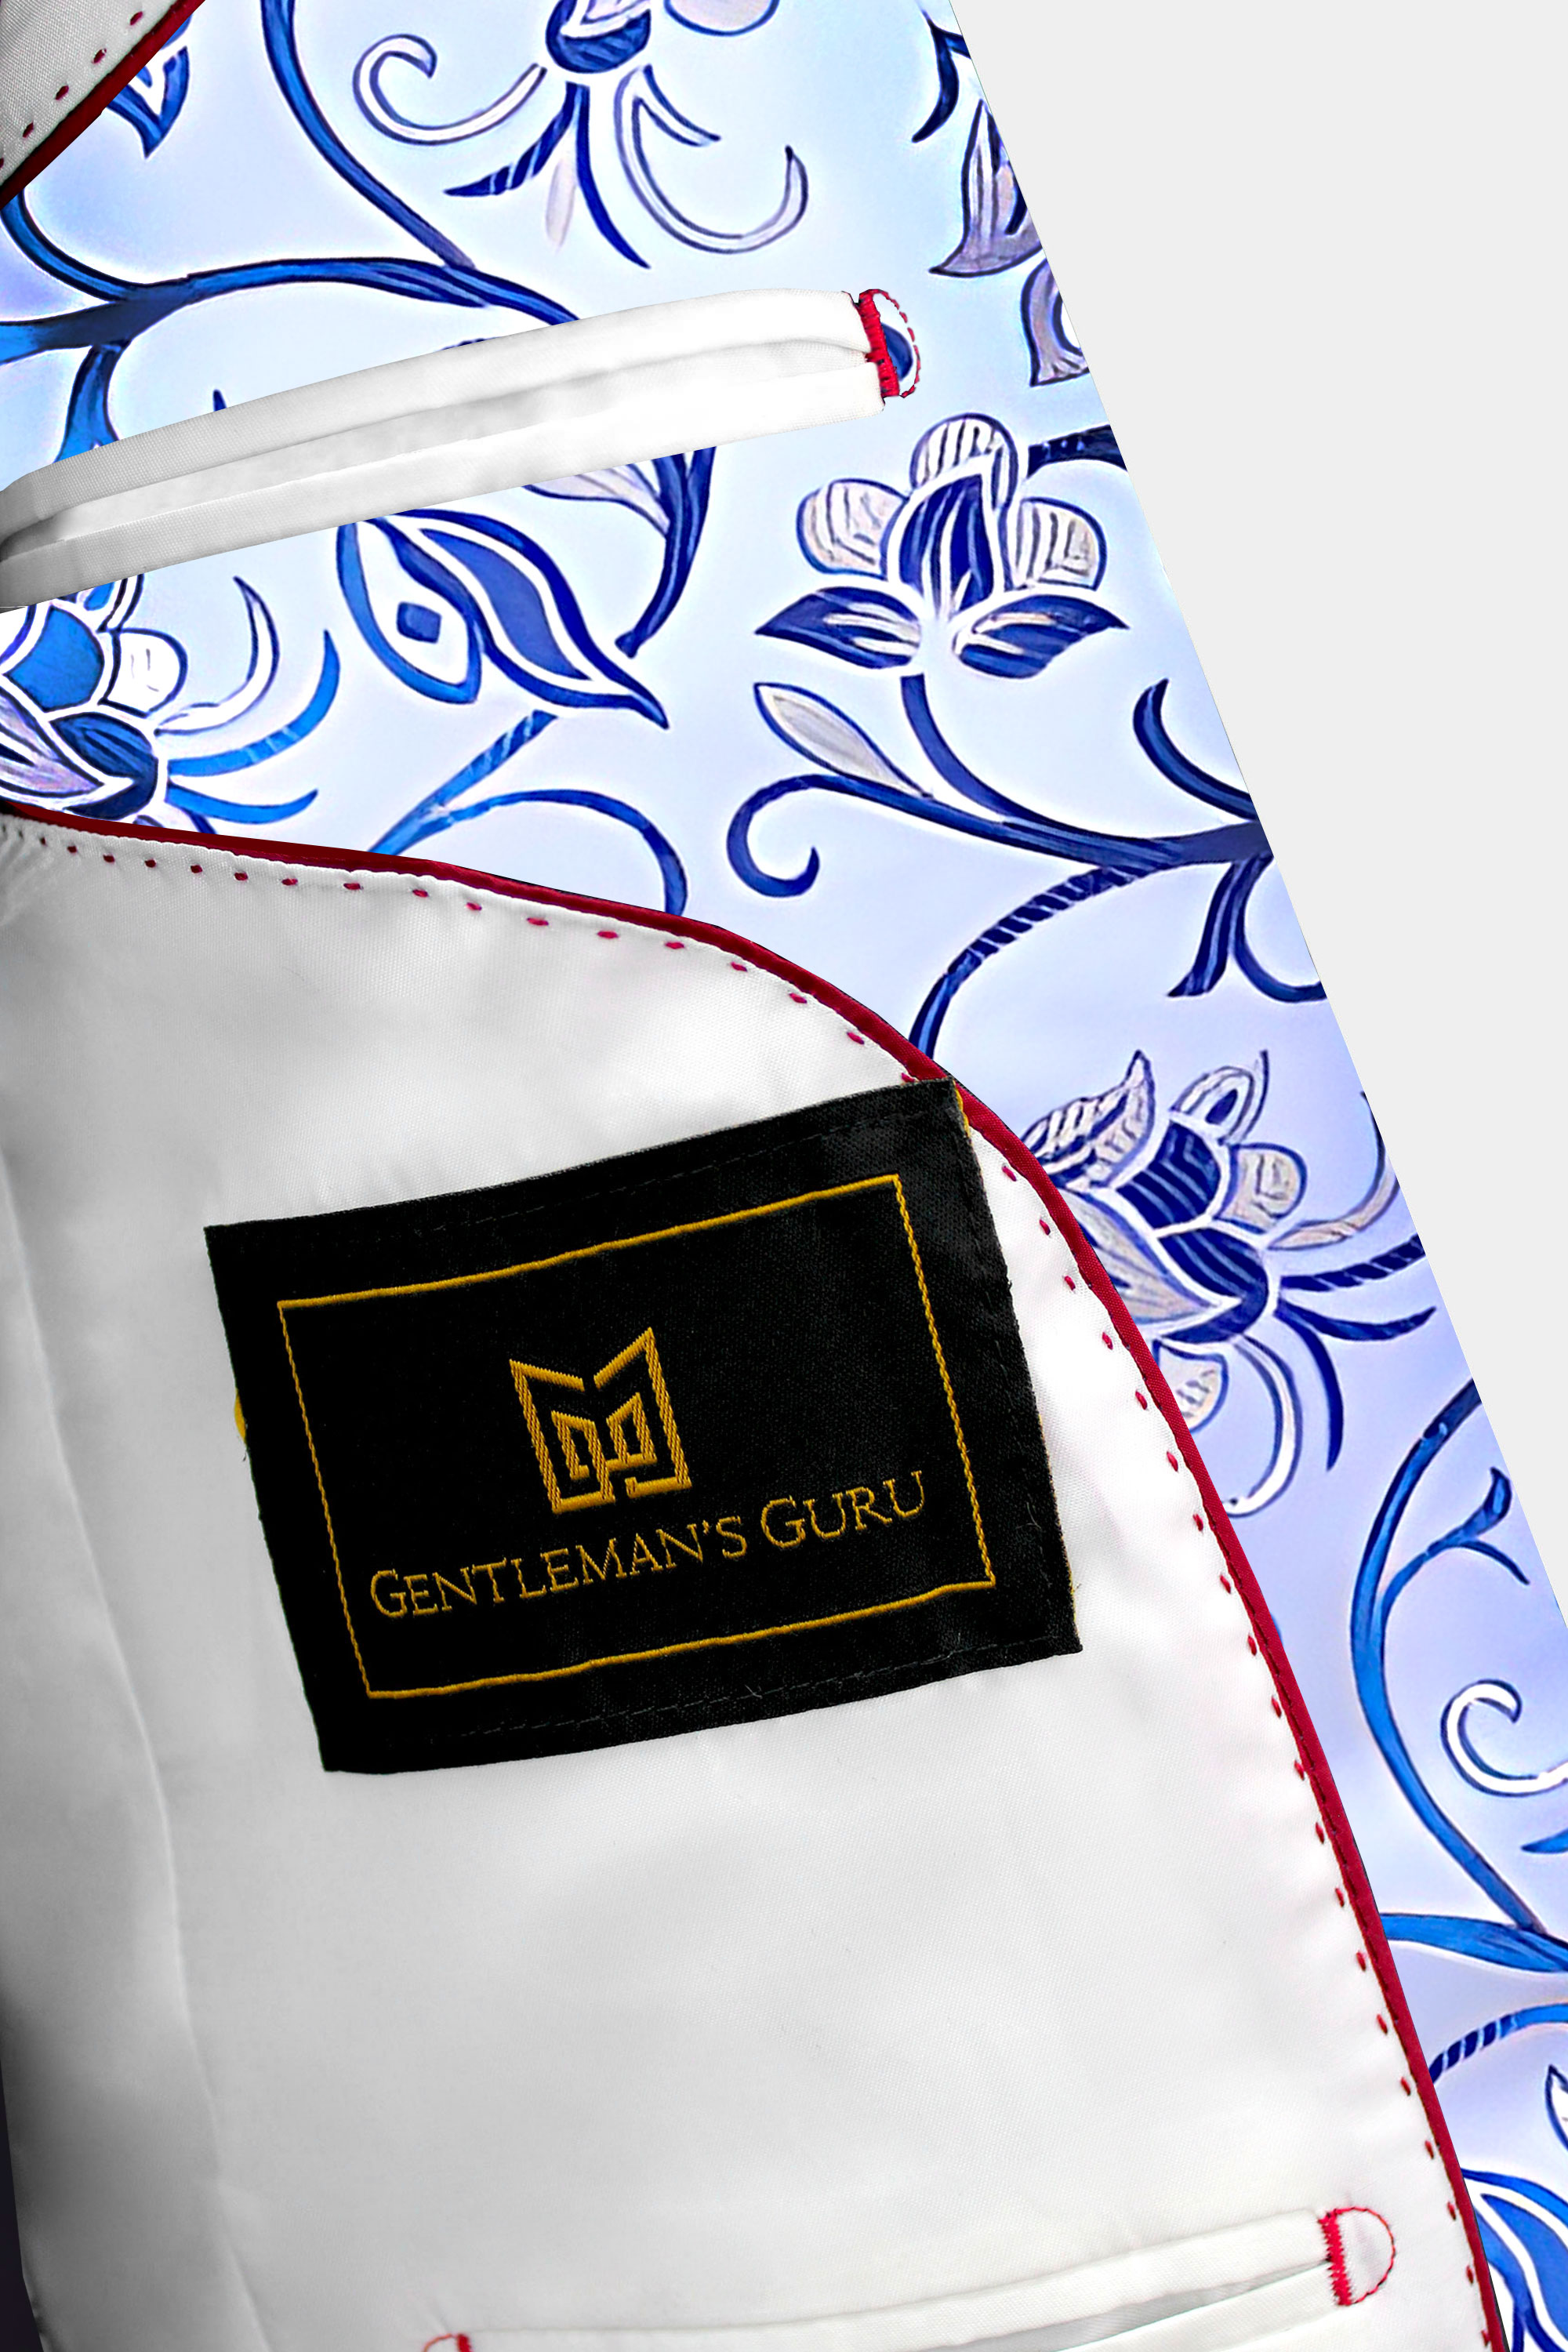 Inside-Silver-and-Blue-Suit-Jacket-from-Gentlemansguru.com